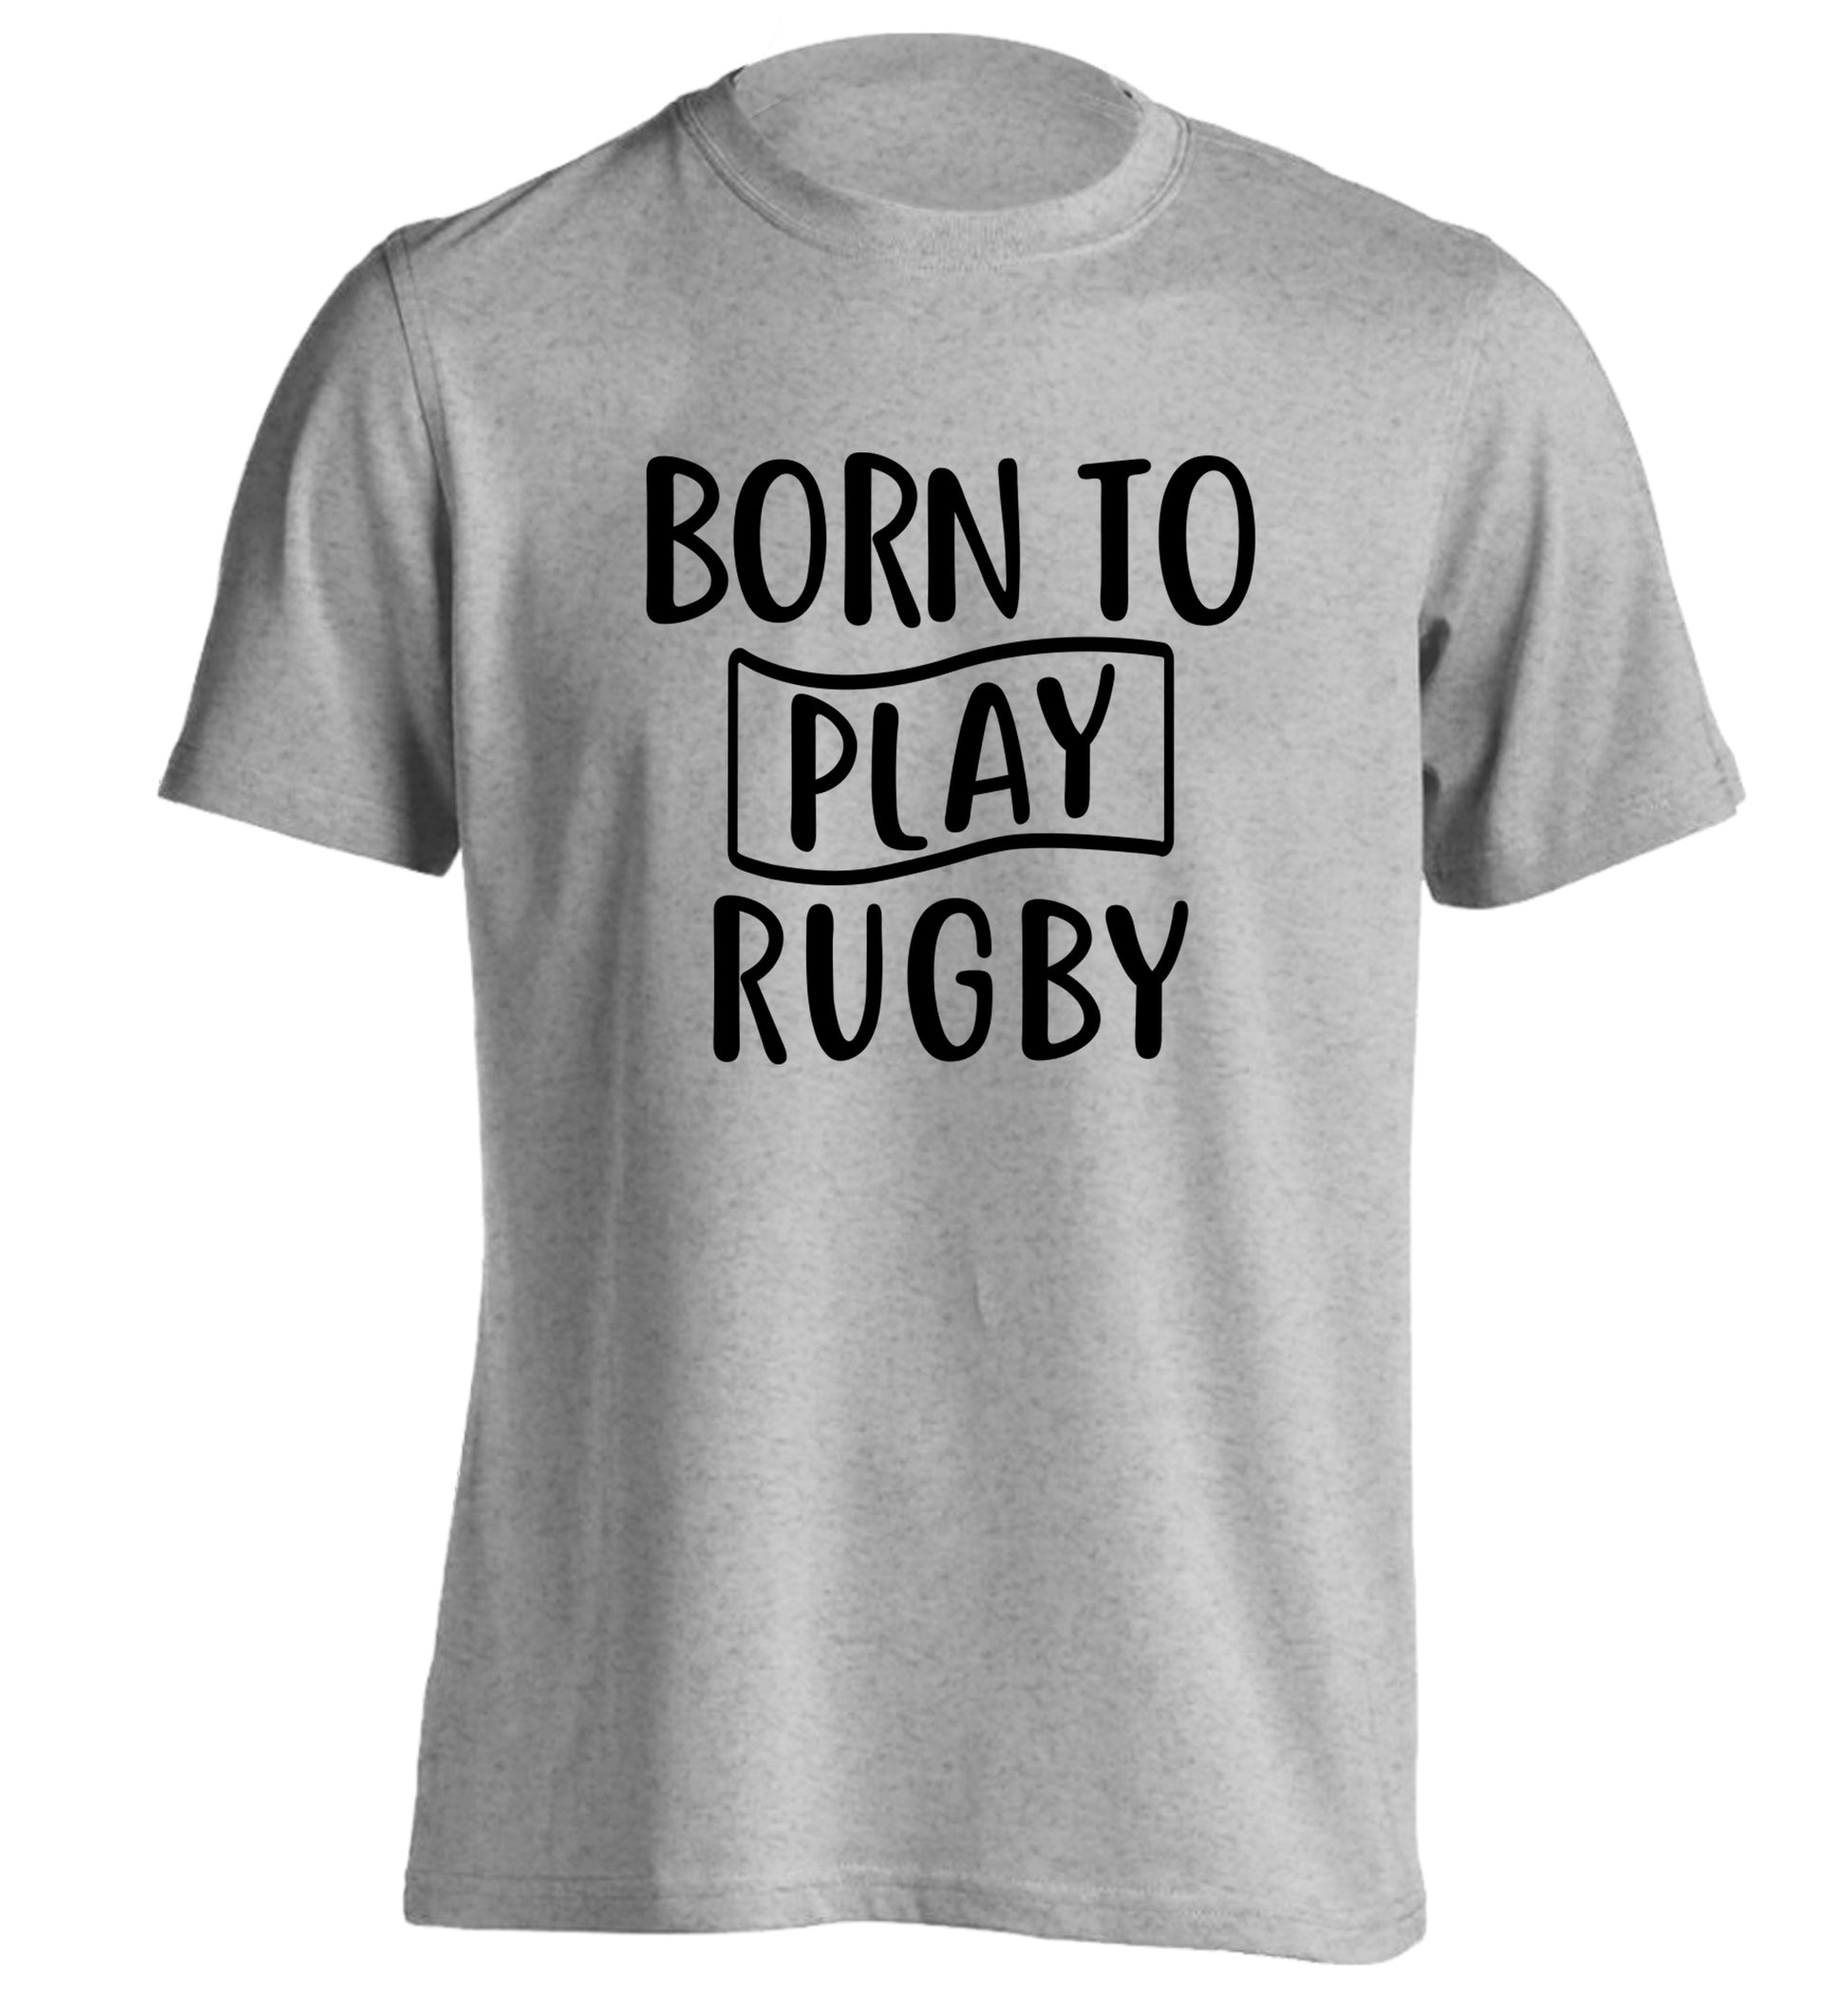 Born to play rugby adults unisex grey Tshirt 2XL